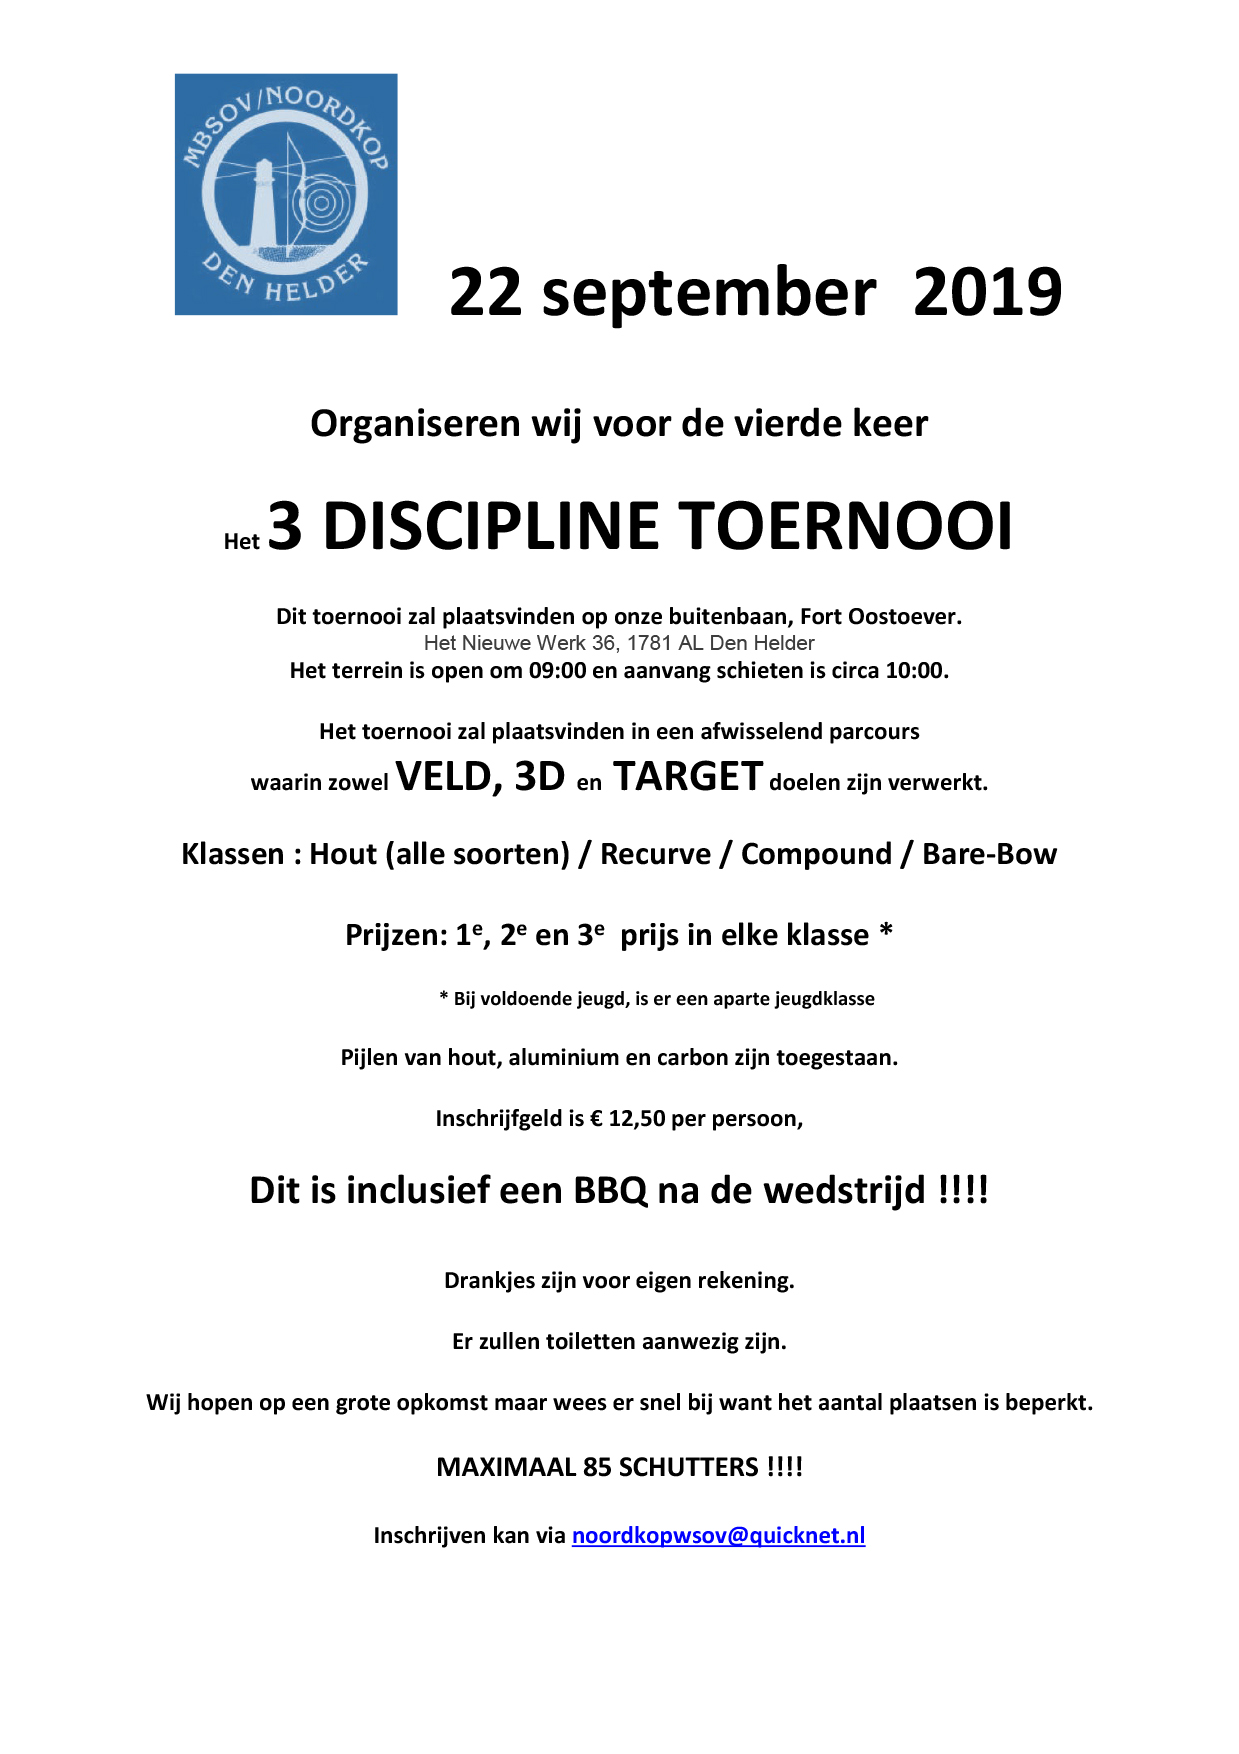 Het 3 Discipline Toernooi MBSOV Noordkop @ Buitenbaan, Fort Oostoever